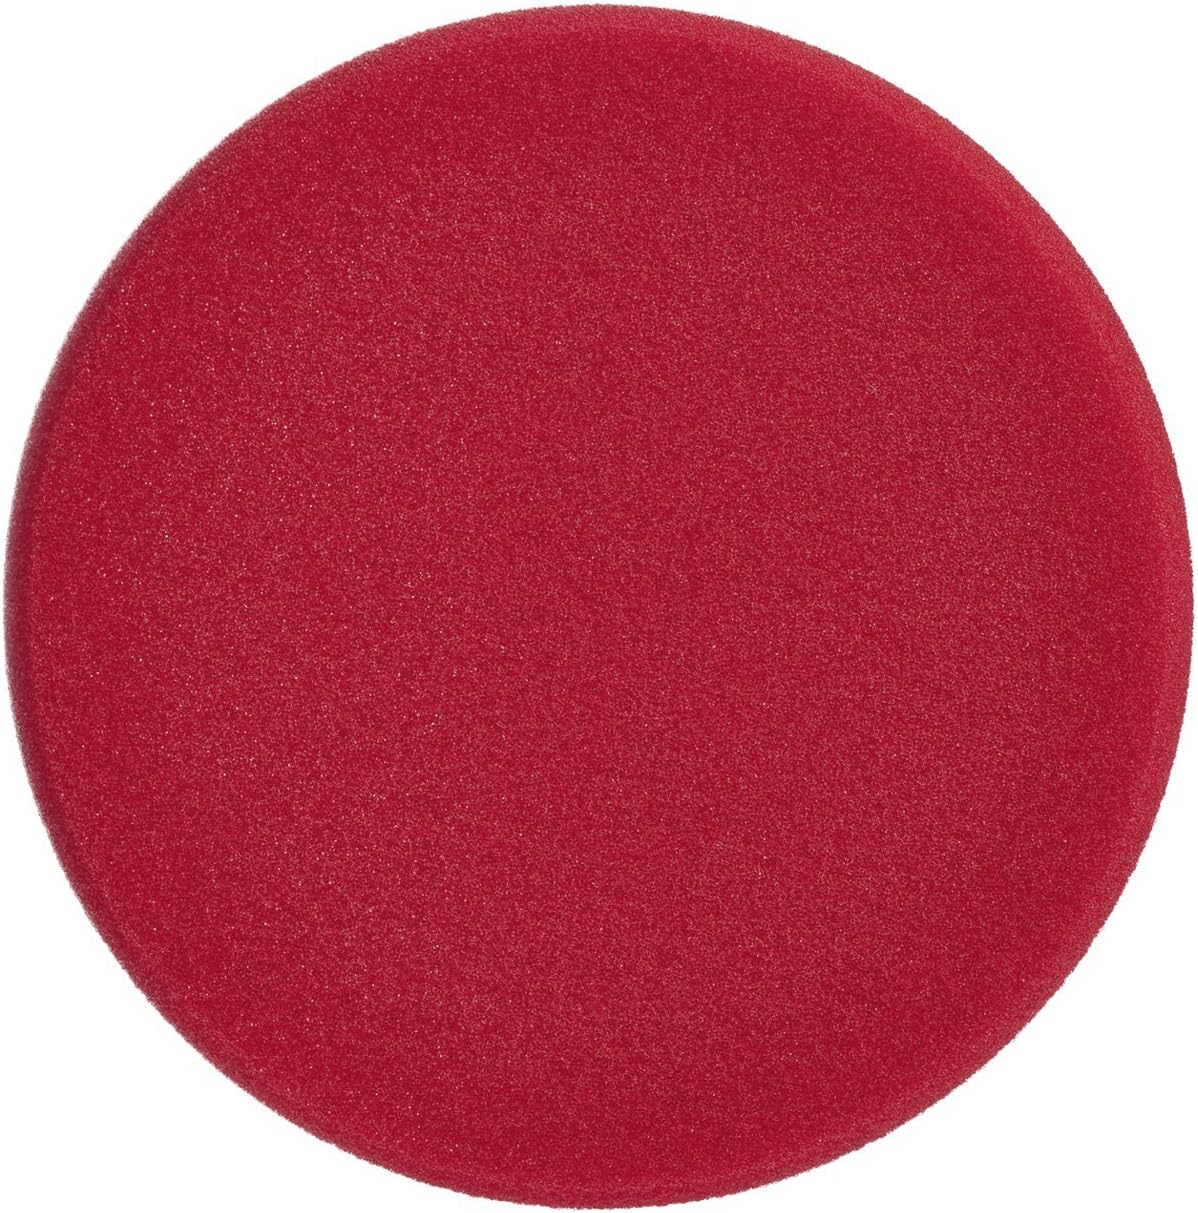 Sonax 493100 Polishing Pad, Red (Hard)